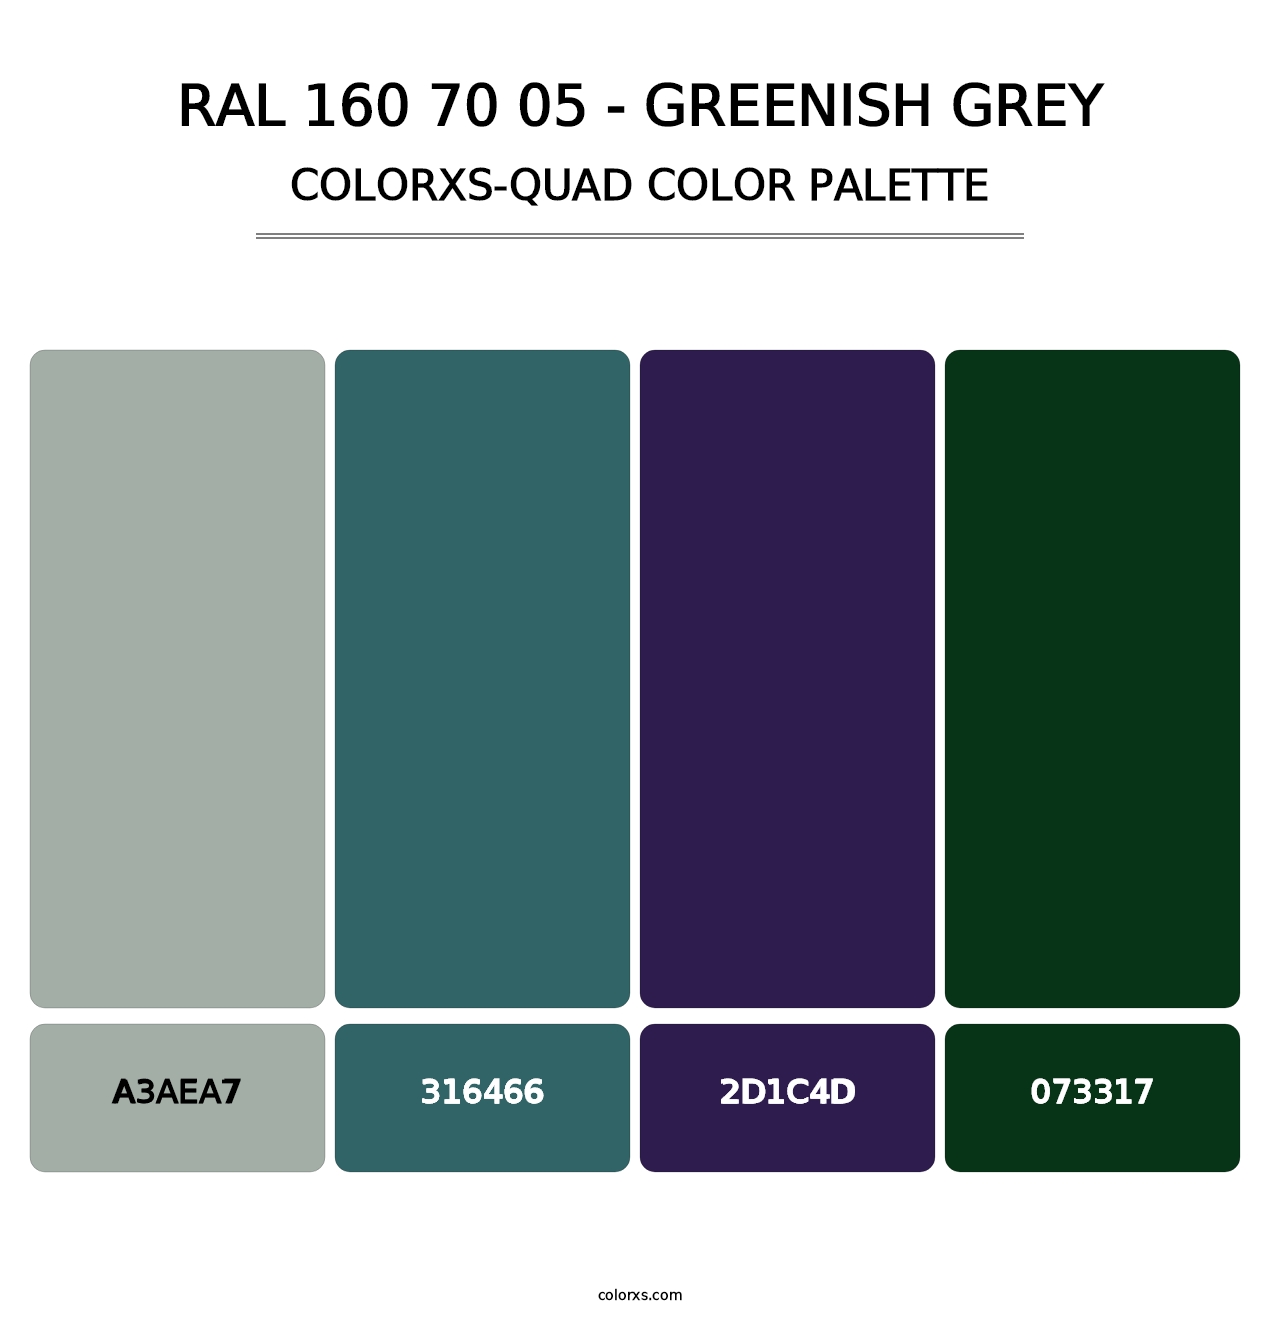 RAL 160 70 05 - Greenish Grey - Colorxs Quad Palette